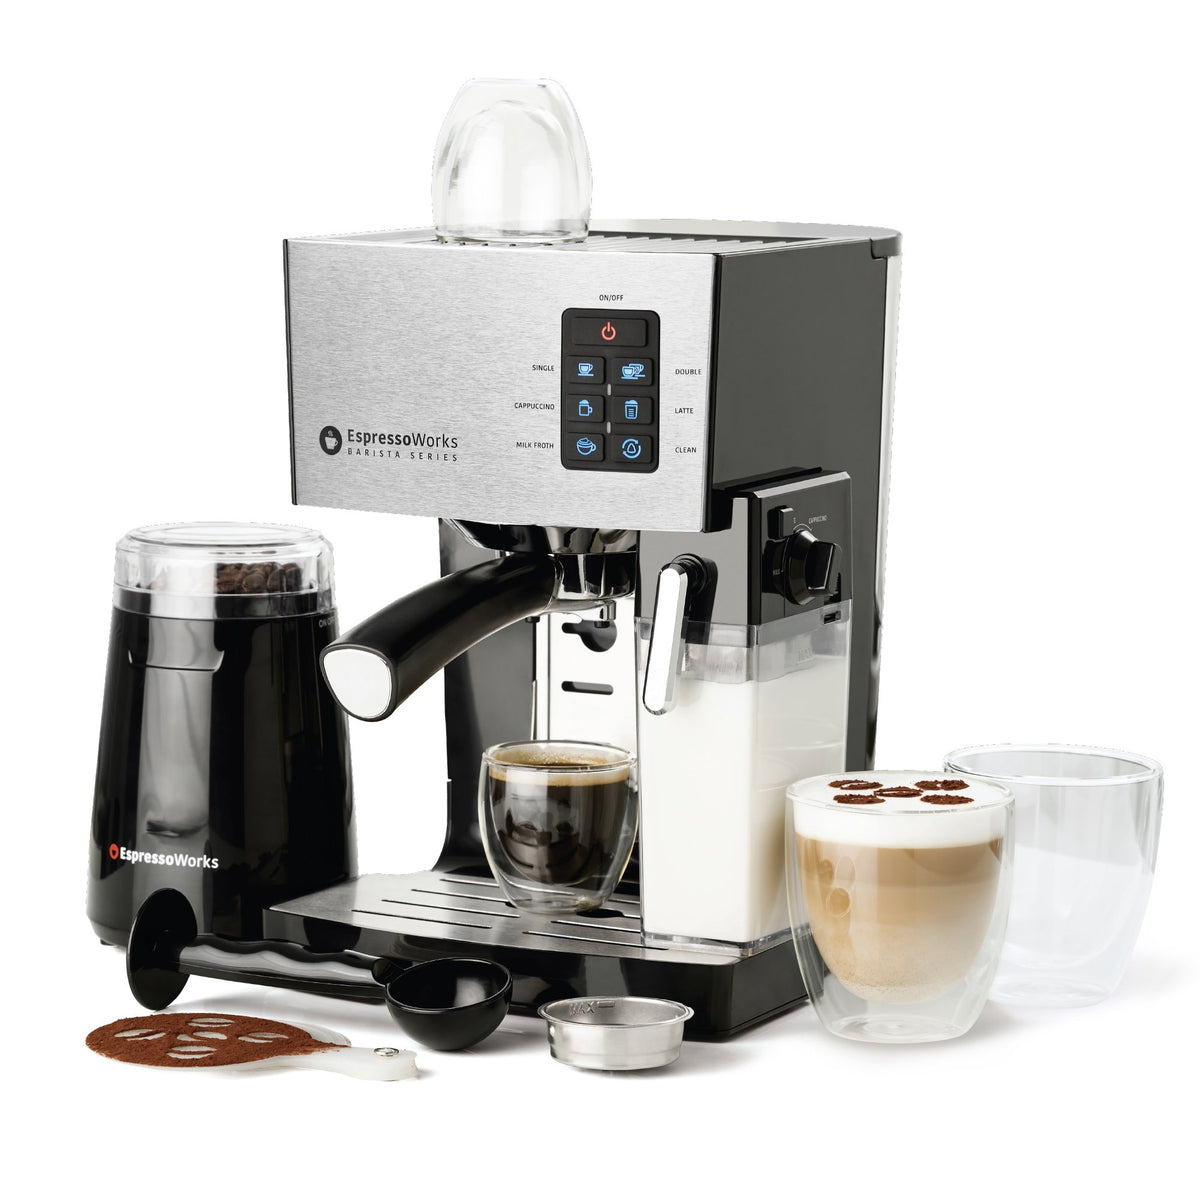 Replacement Portafilter Set for the EspressoWorks 10pc 19-bar Espresso and Cappuccino Maker Set